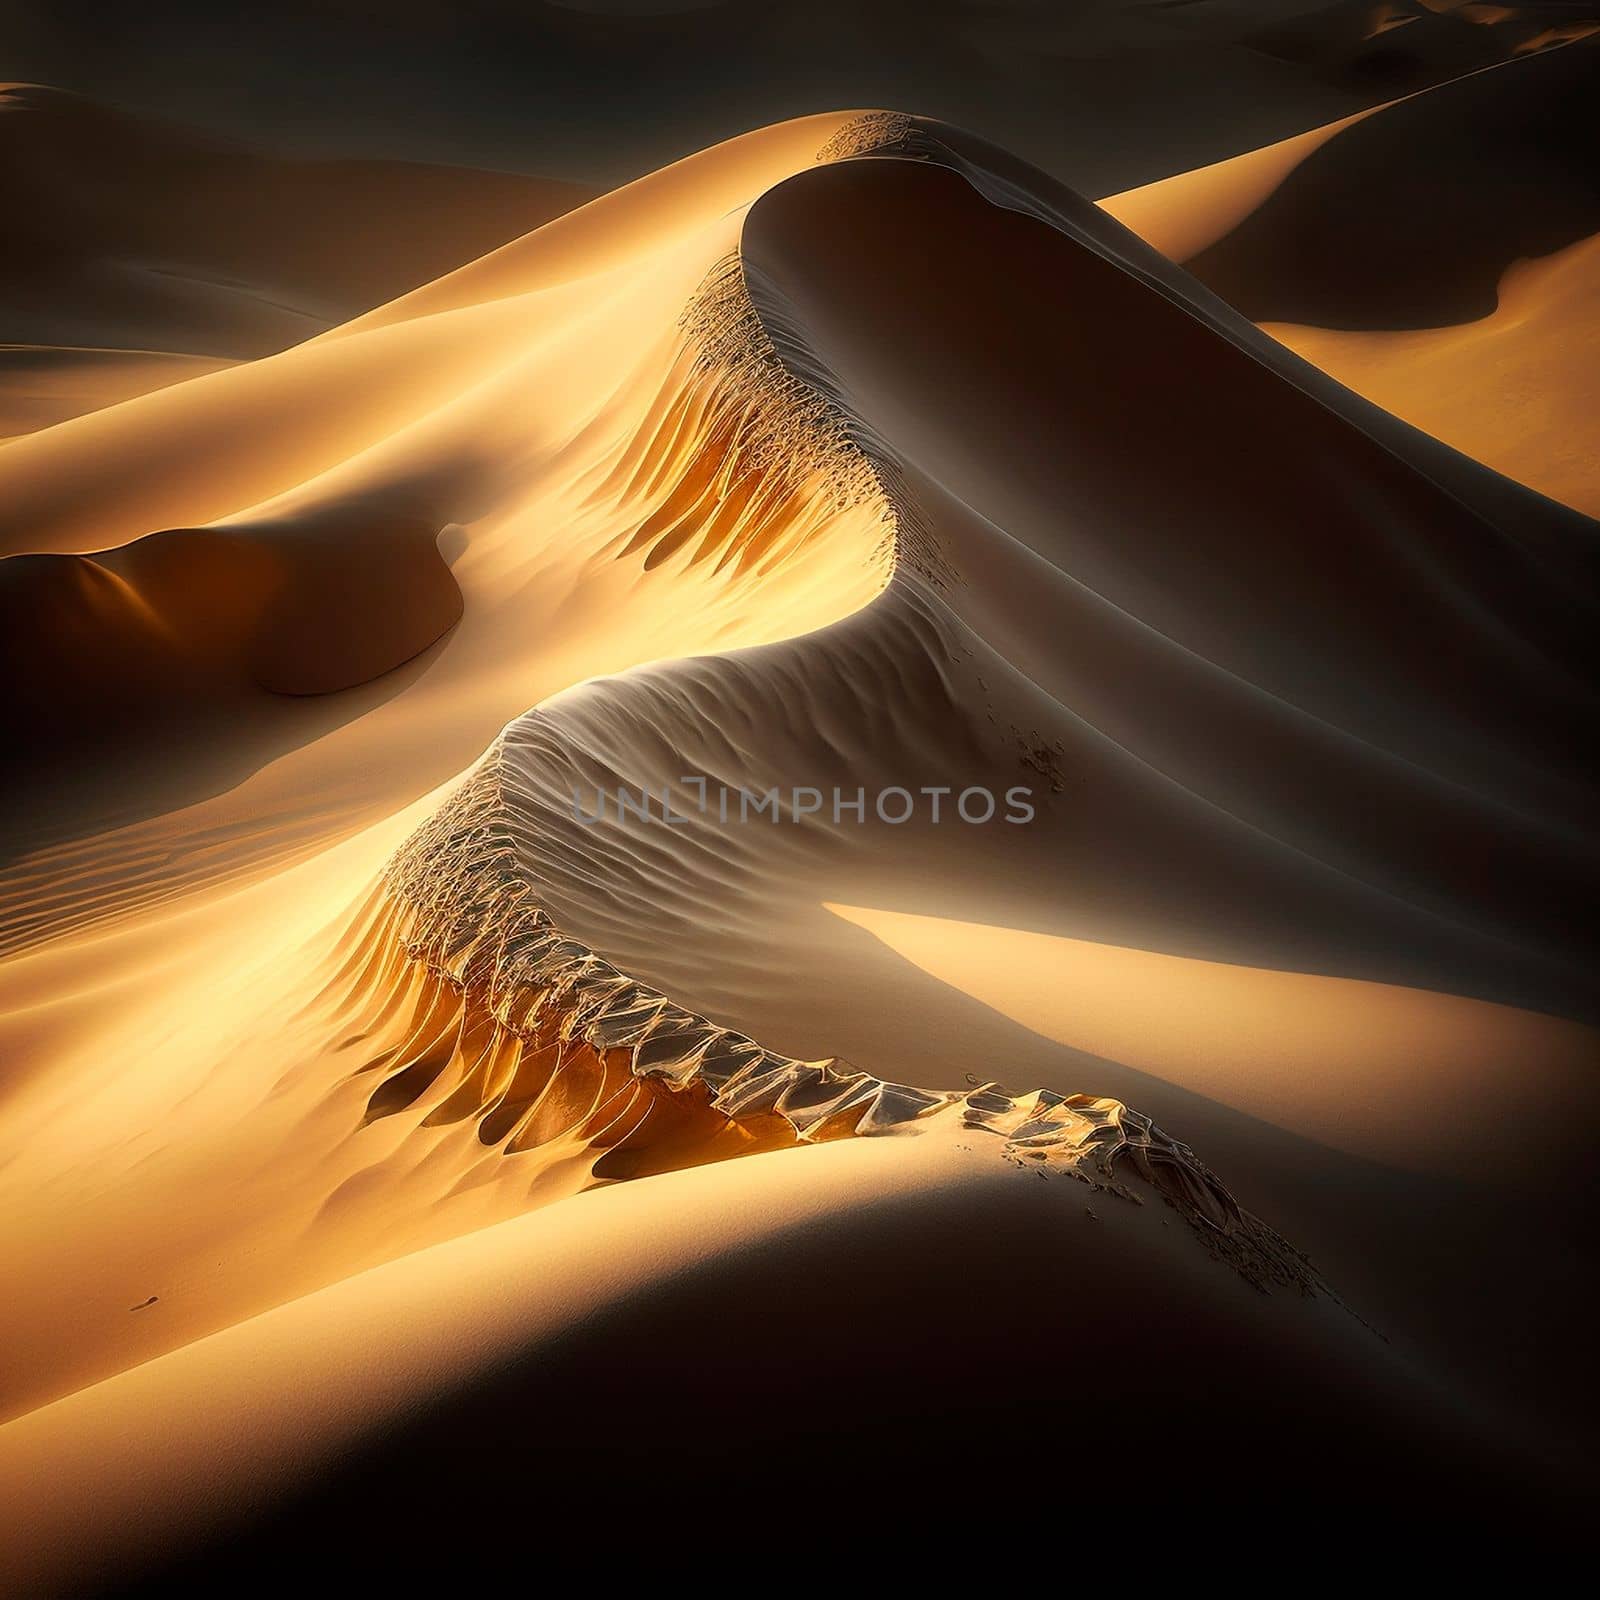 Cinematic depiction of the desert and desert dunes. High quality illustration